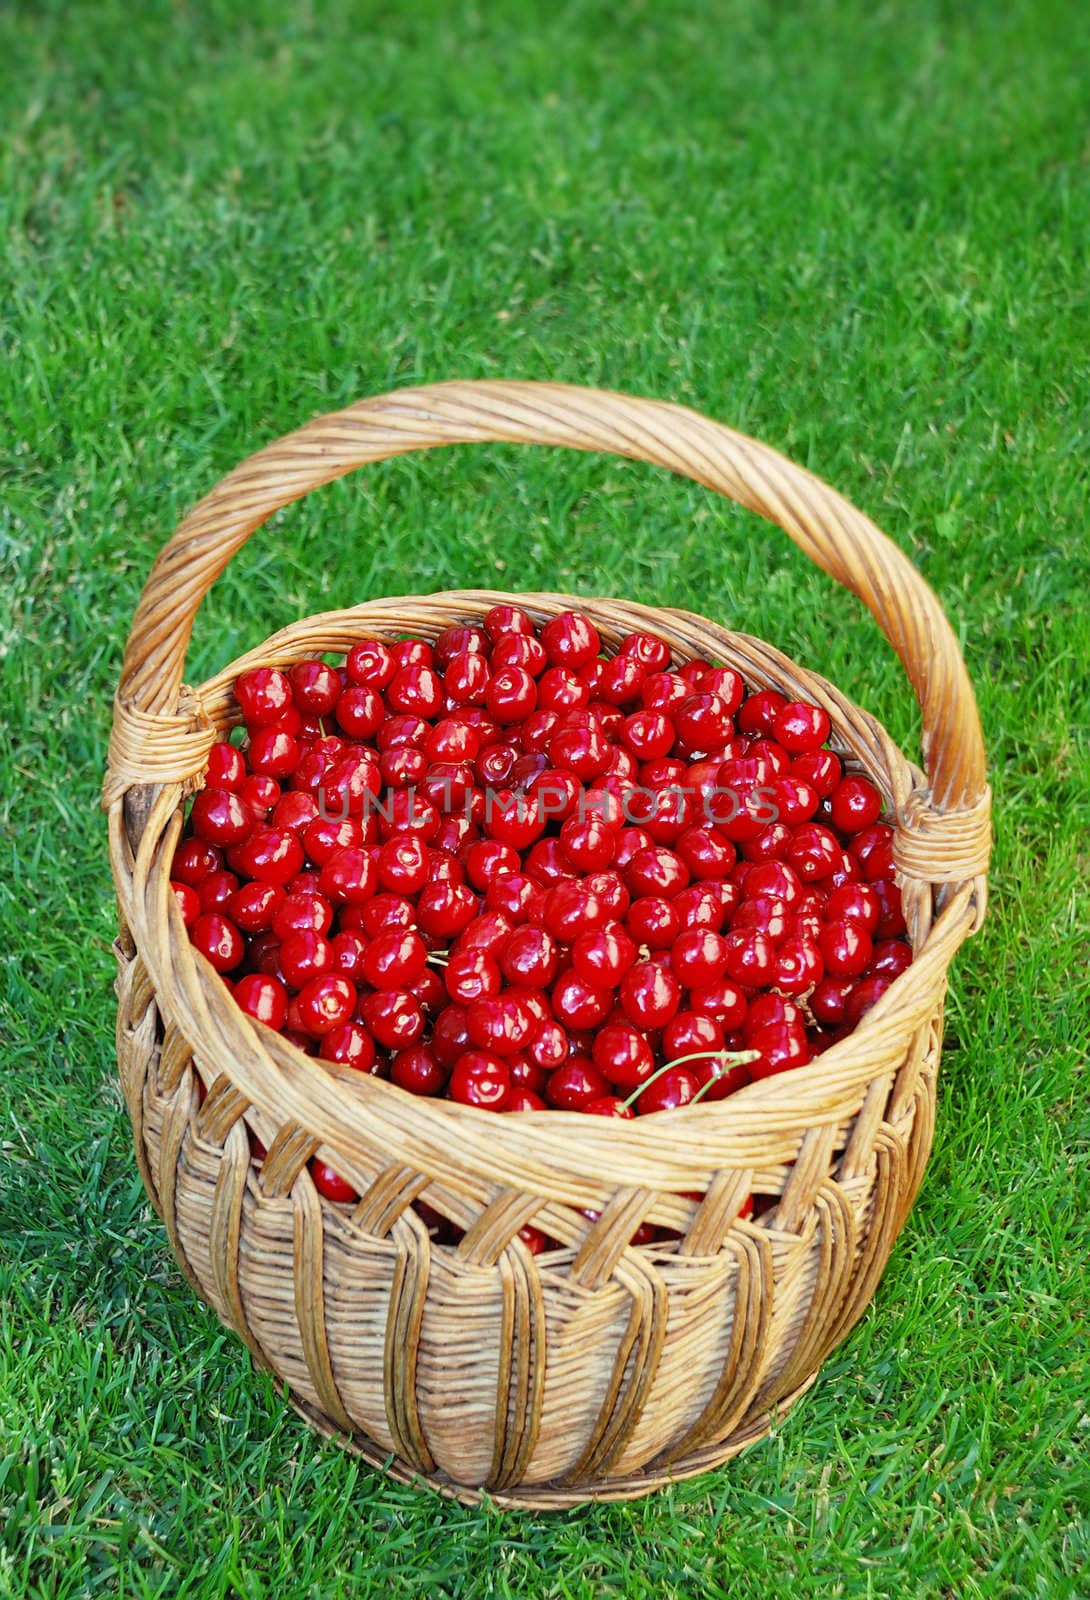 Bing cherries in basket by whitechild